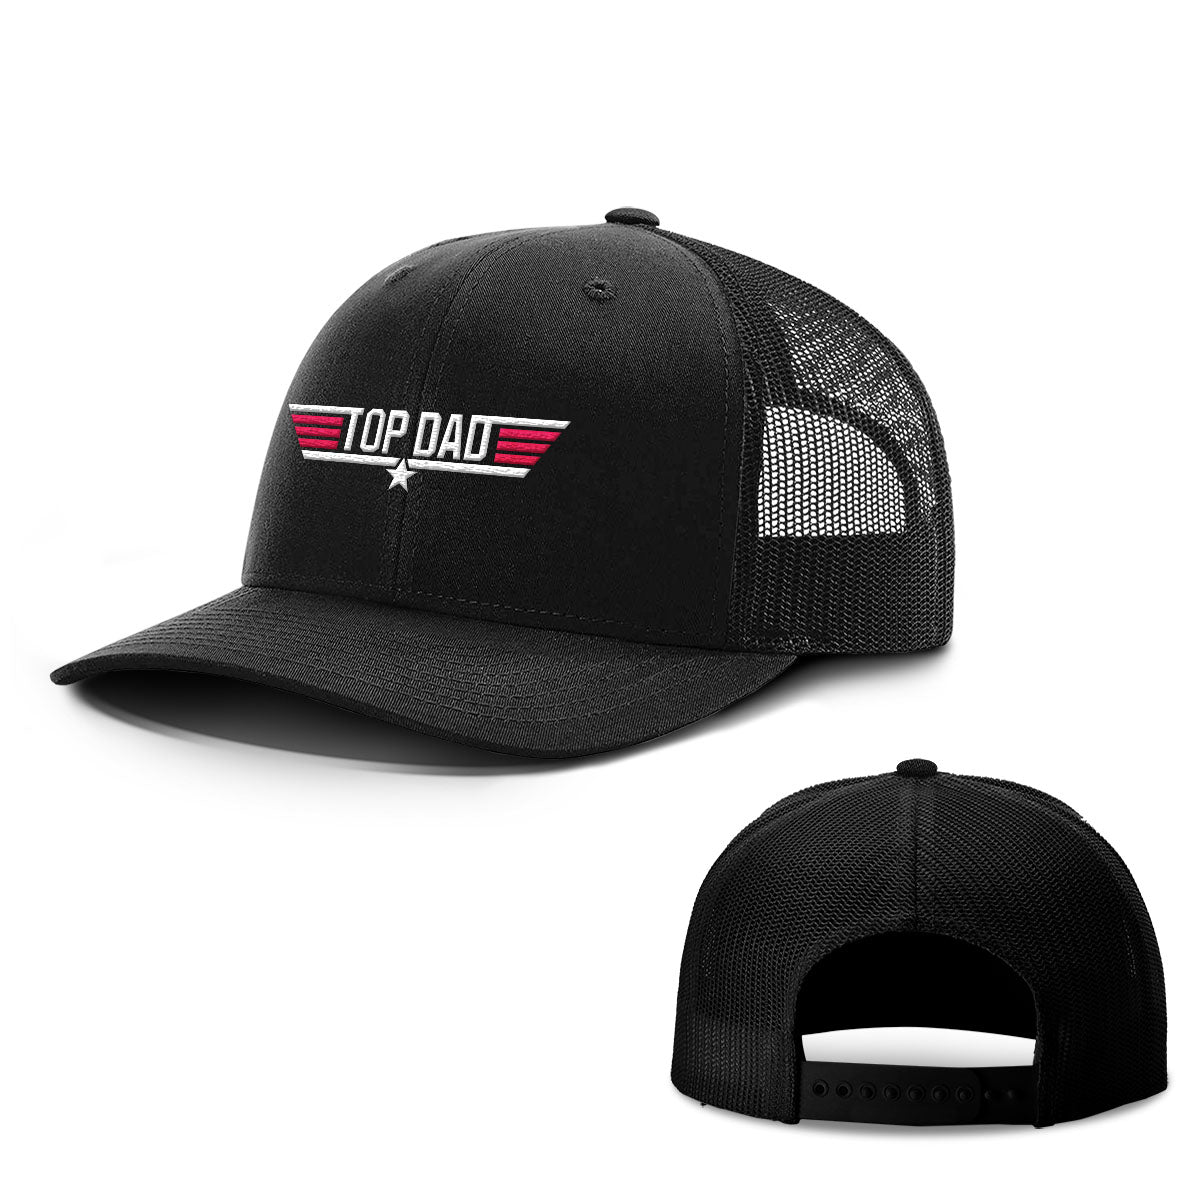 Top Dad Hats - BustedTees.com